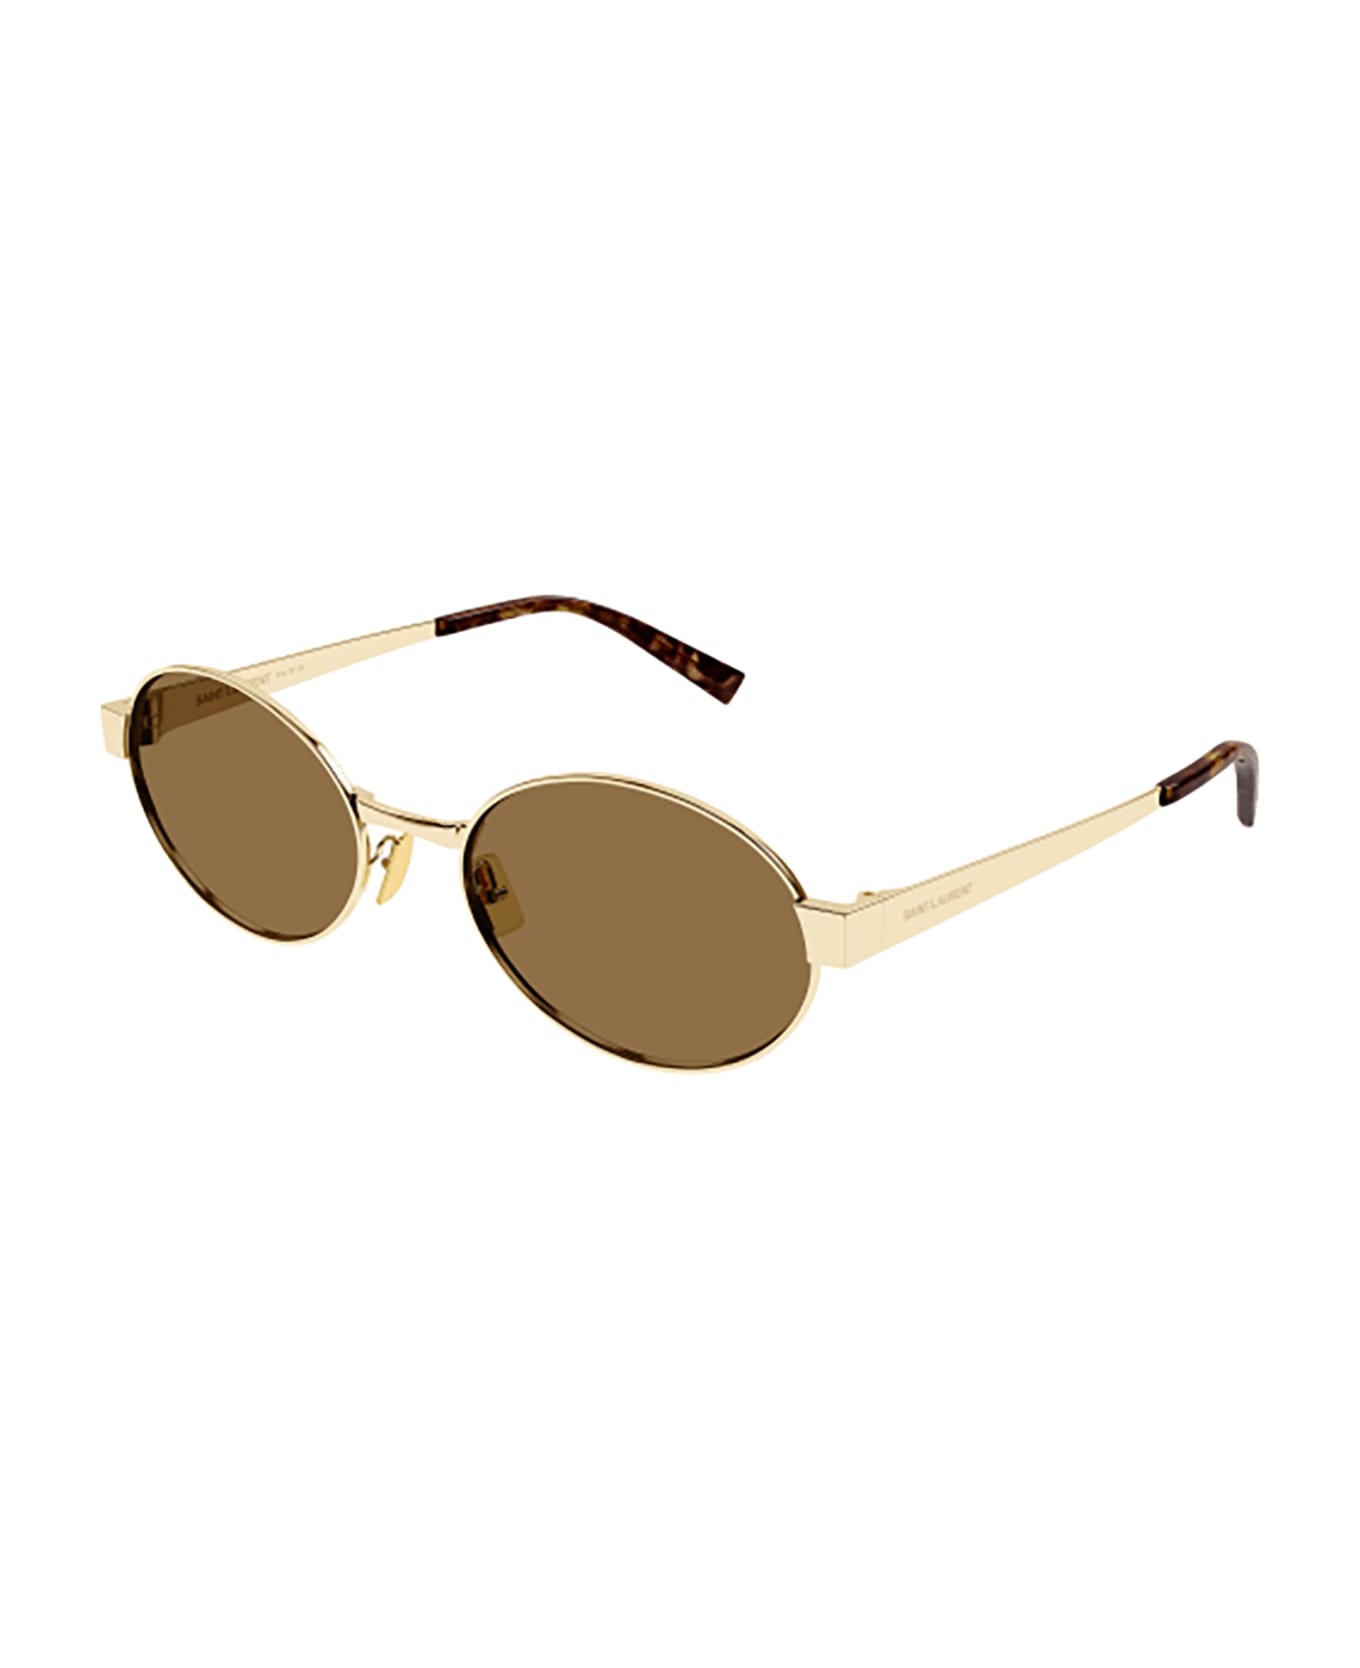 Saint Laurent Eyewear SL 692 Sunglasses - Gold Gold Brown